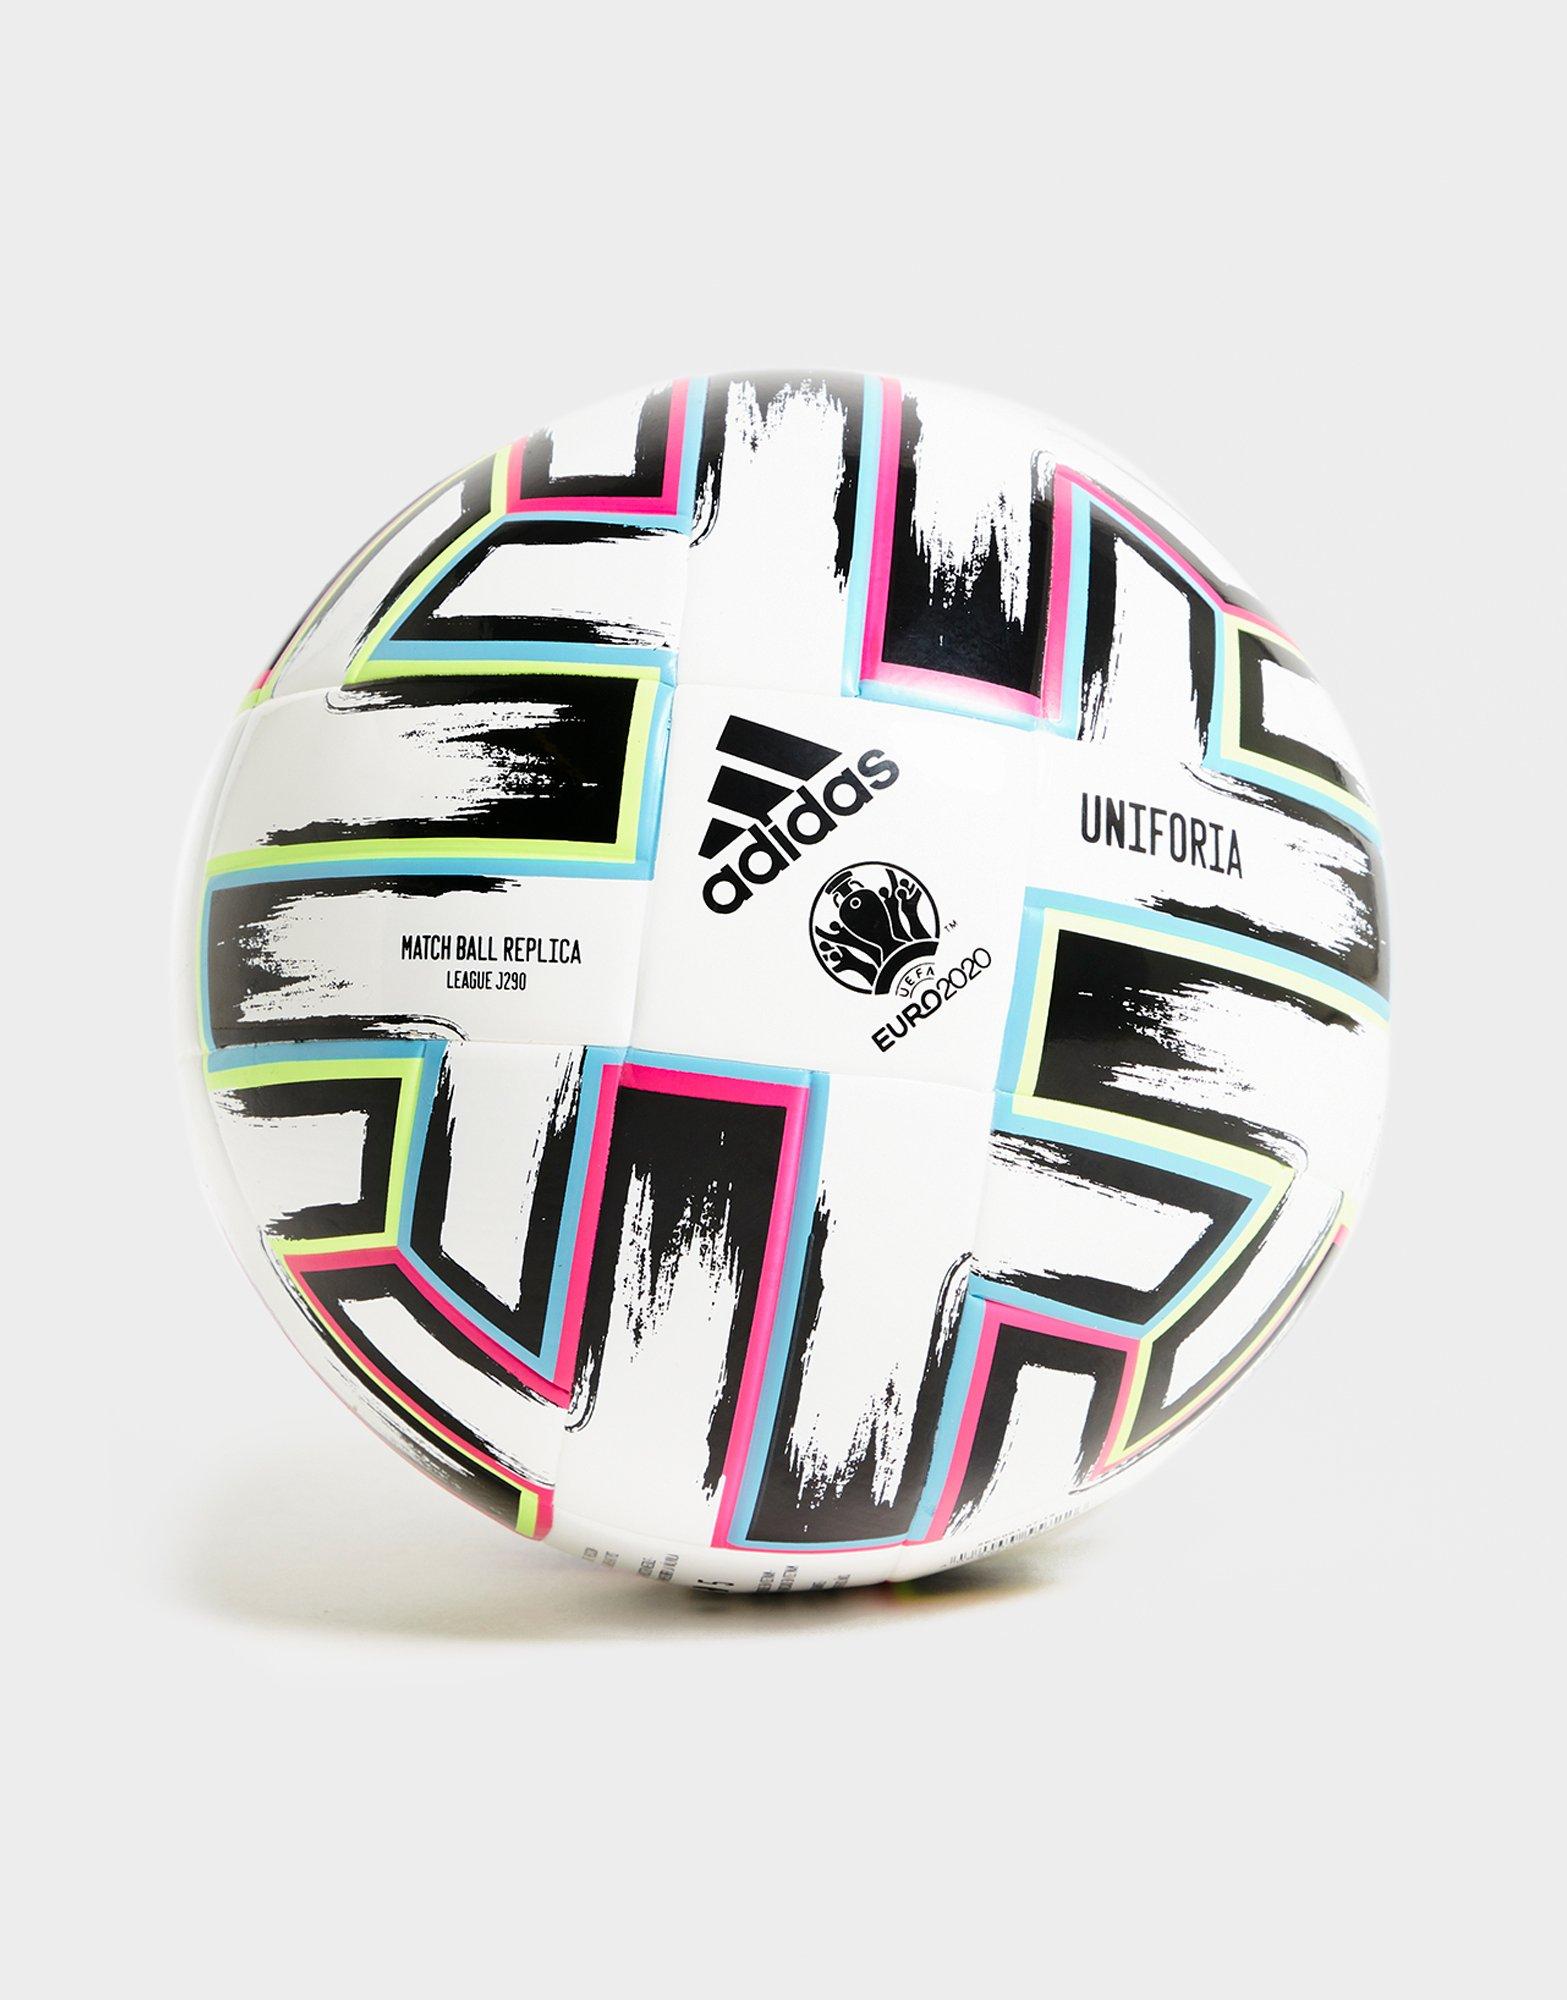 adidas ball euro 2020